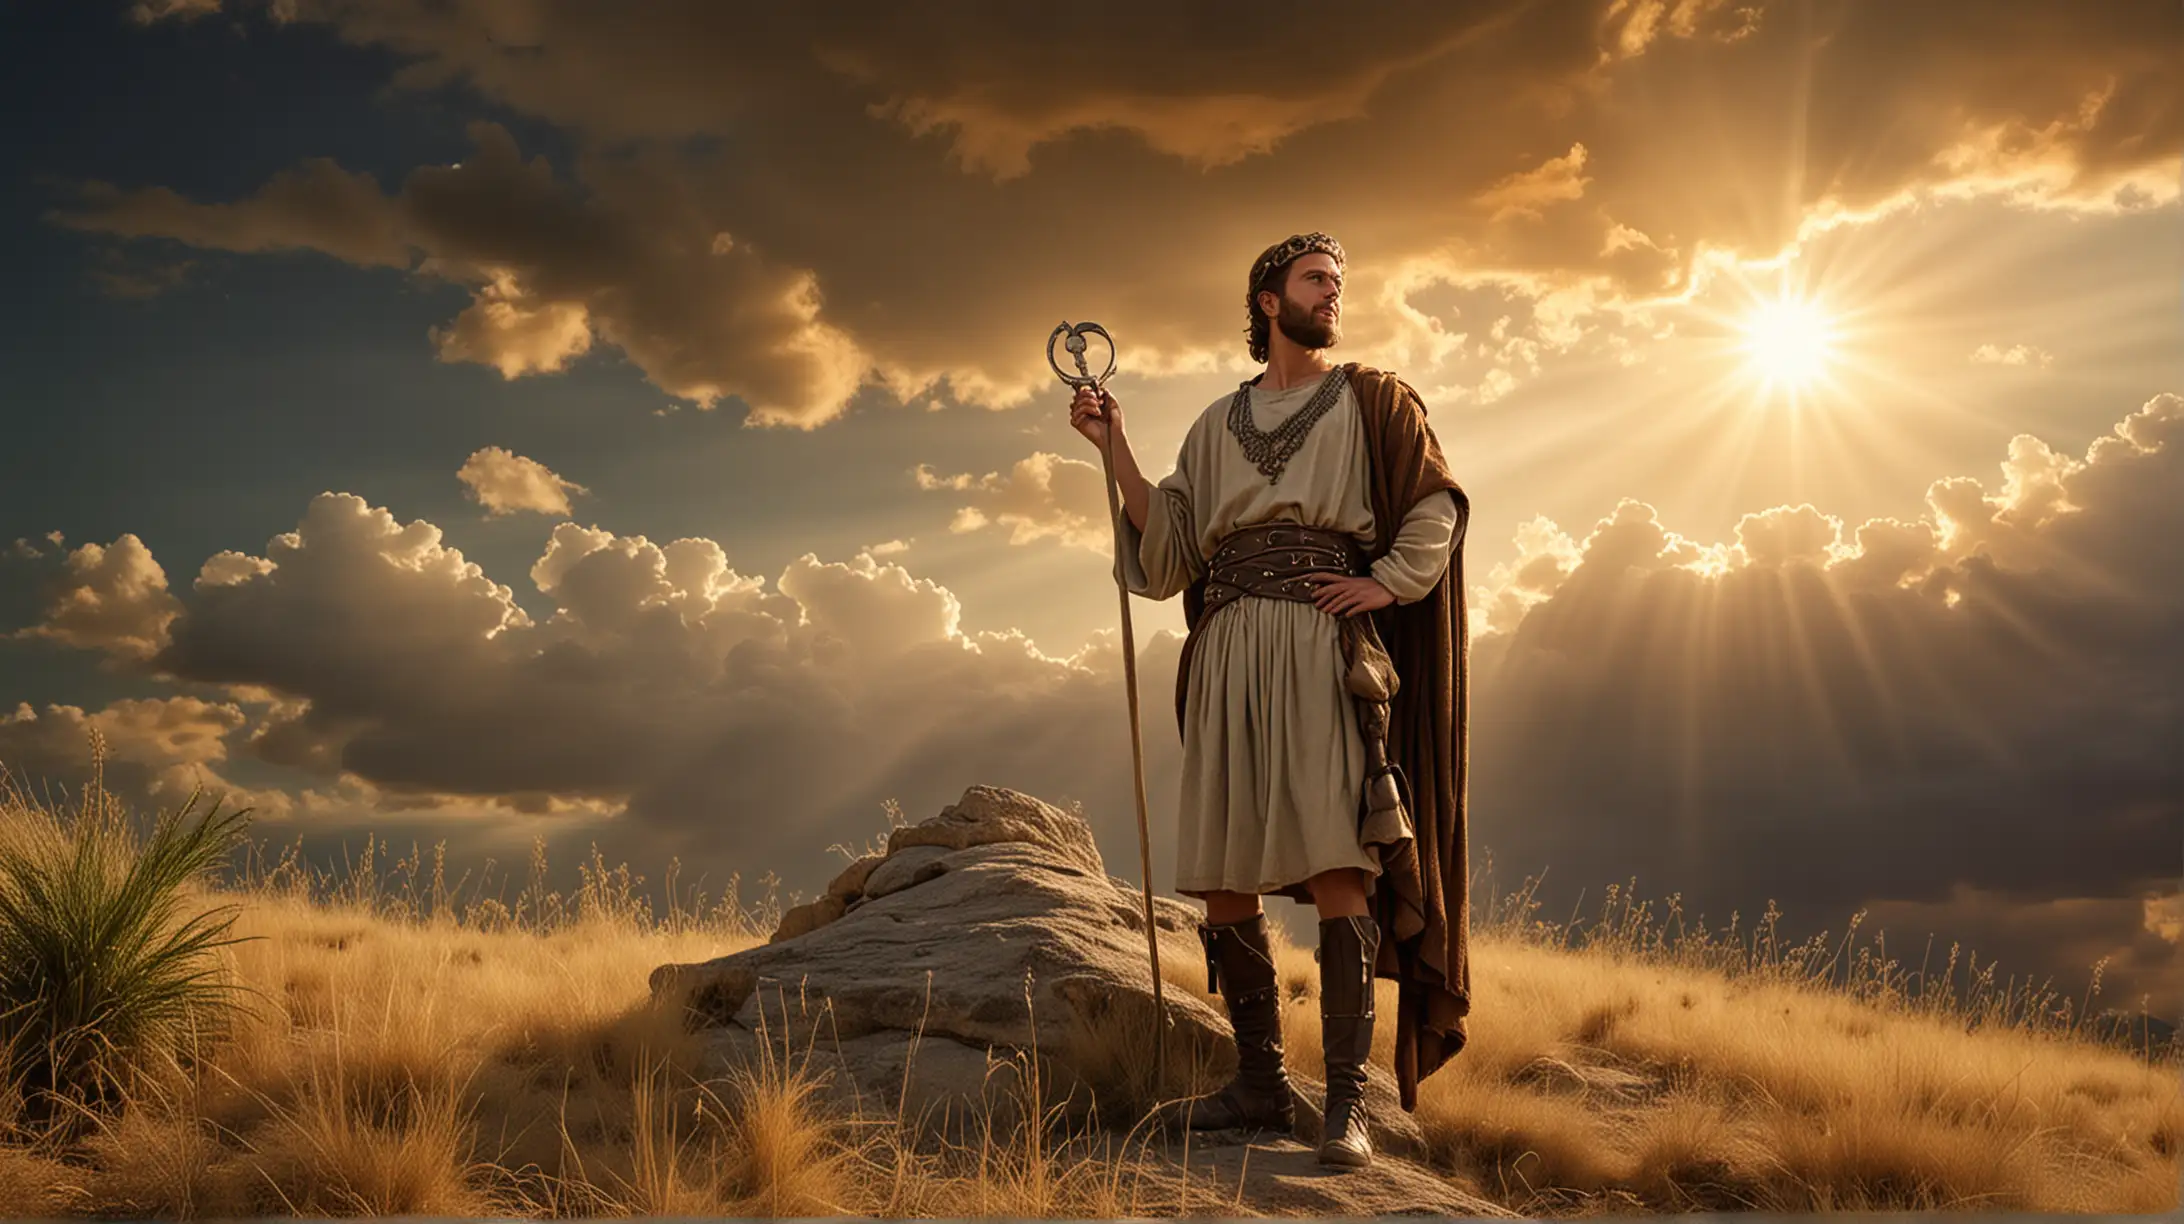 King David in Spiritual Dialogue Biblical Scene on Desert Hill